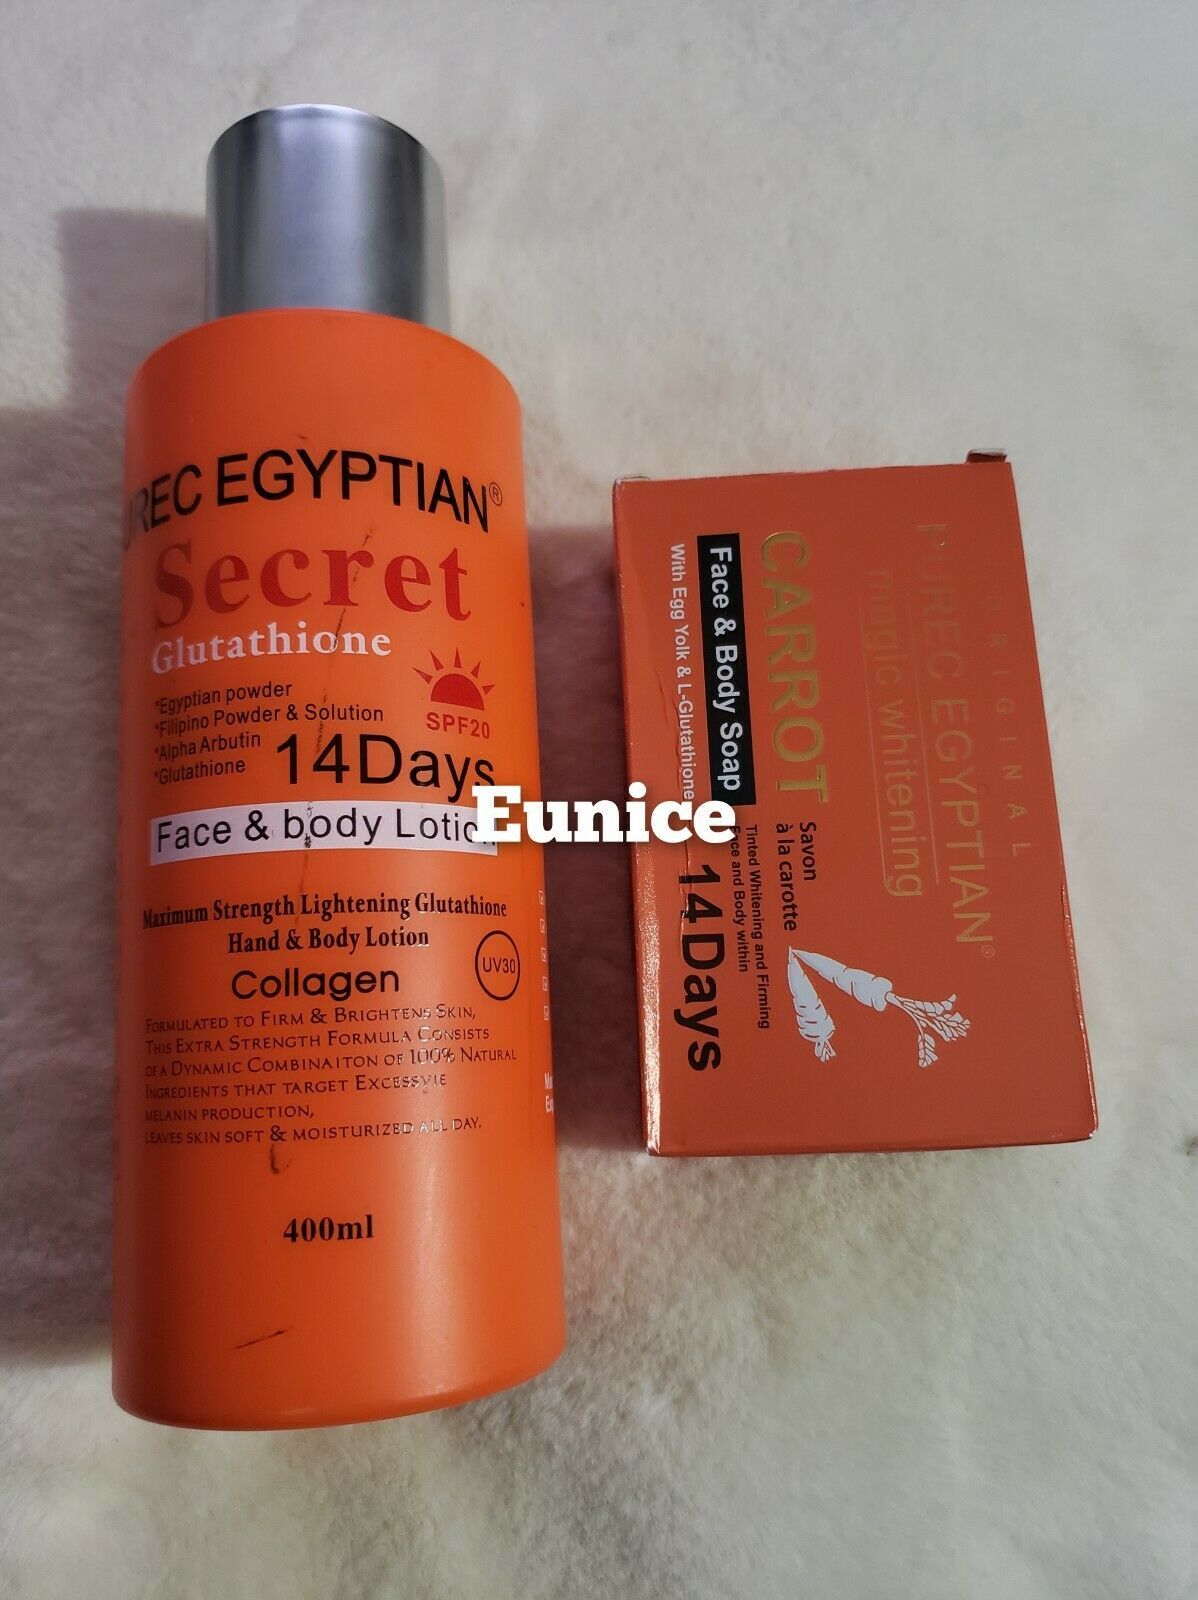 Purec Egyptian secret glutathione maximum strength lotion & soap for face & body - $64.00